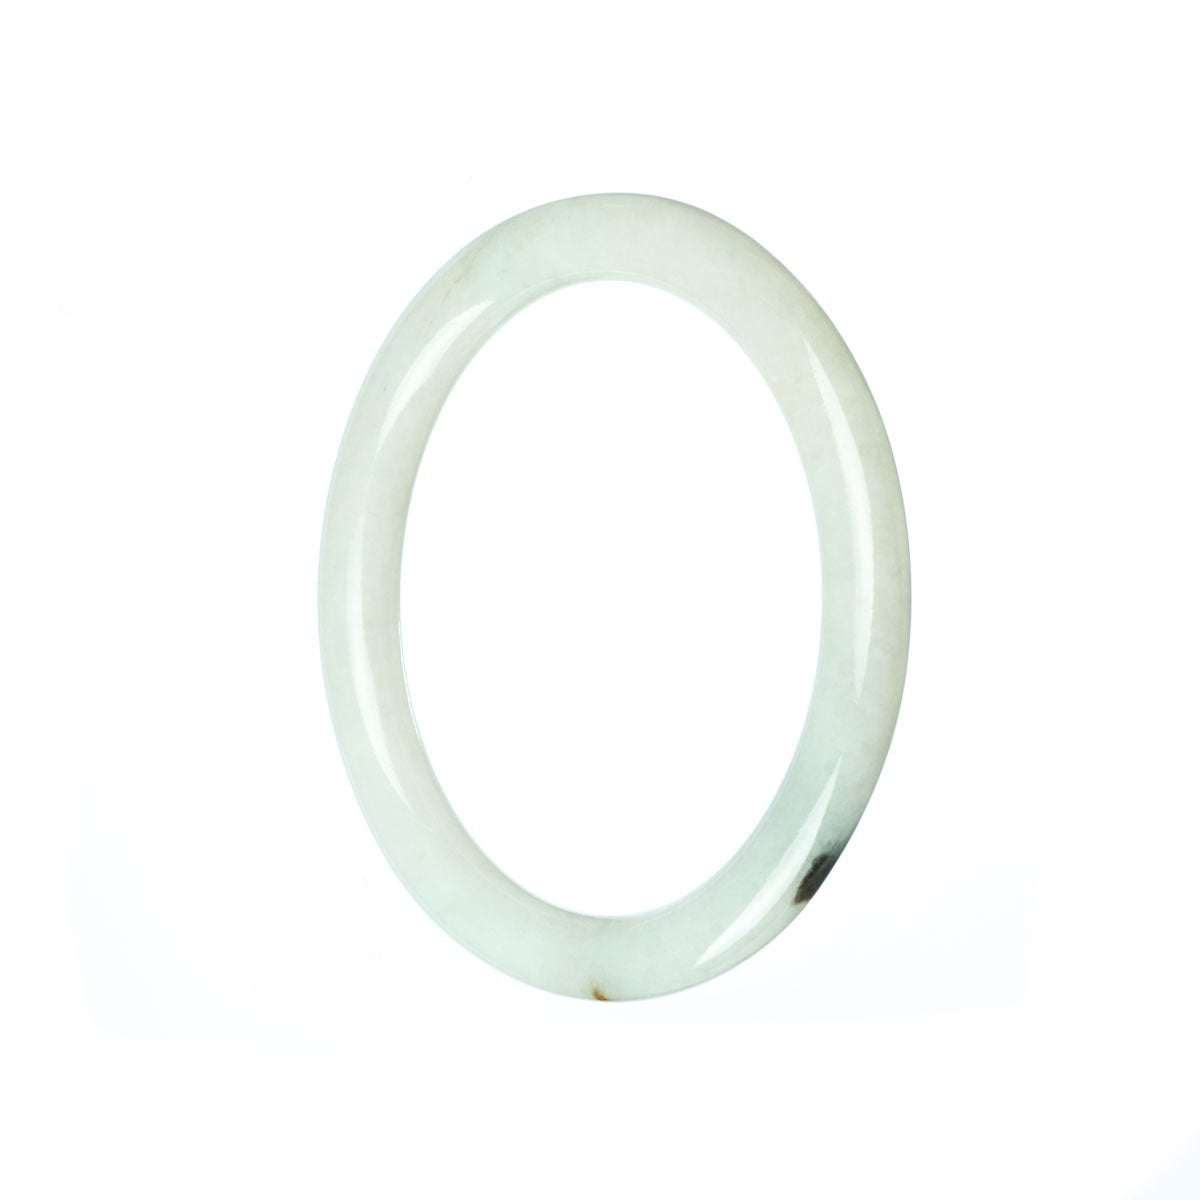 Real Grade A White Jadeite Jade Bangle Bracelet - 53mm Petite Round